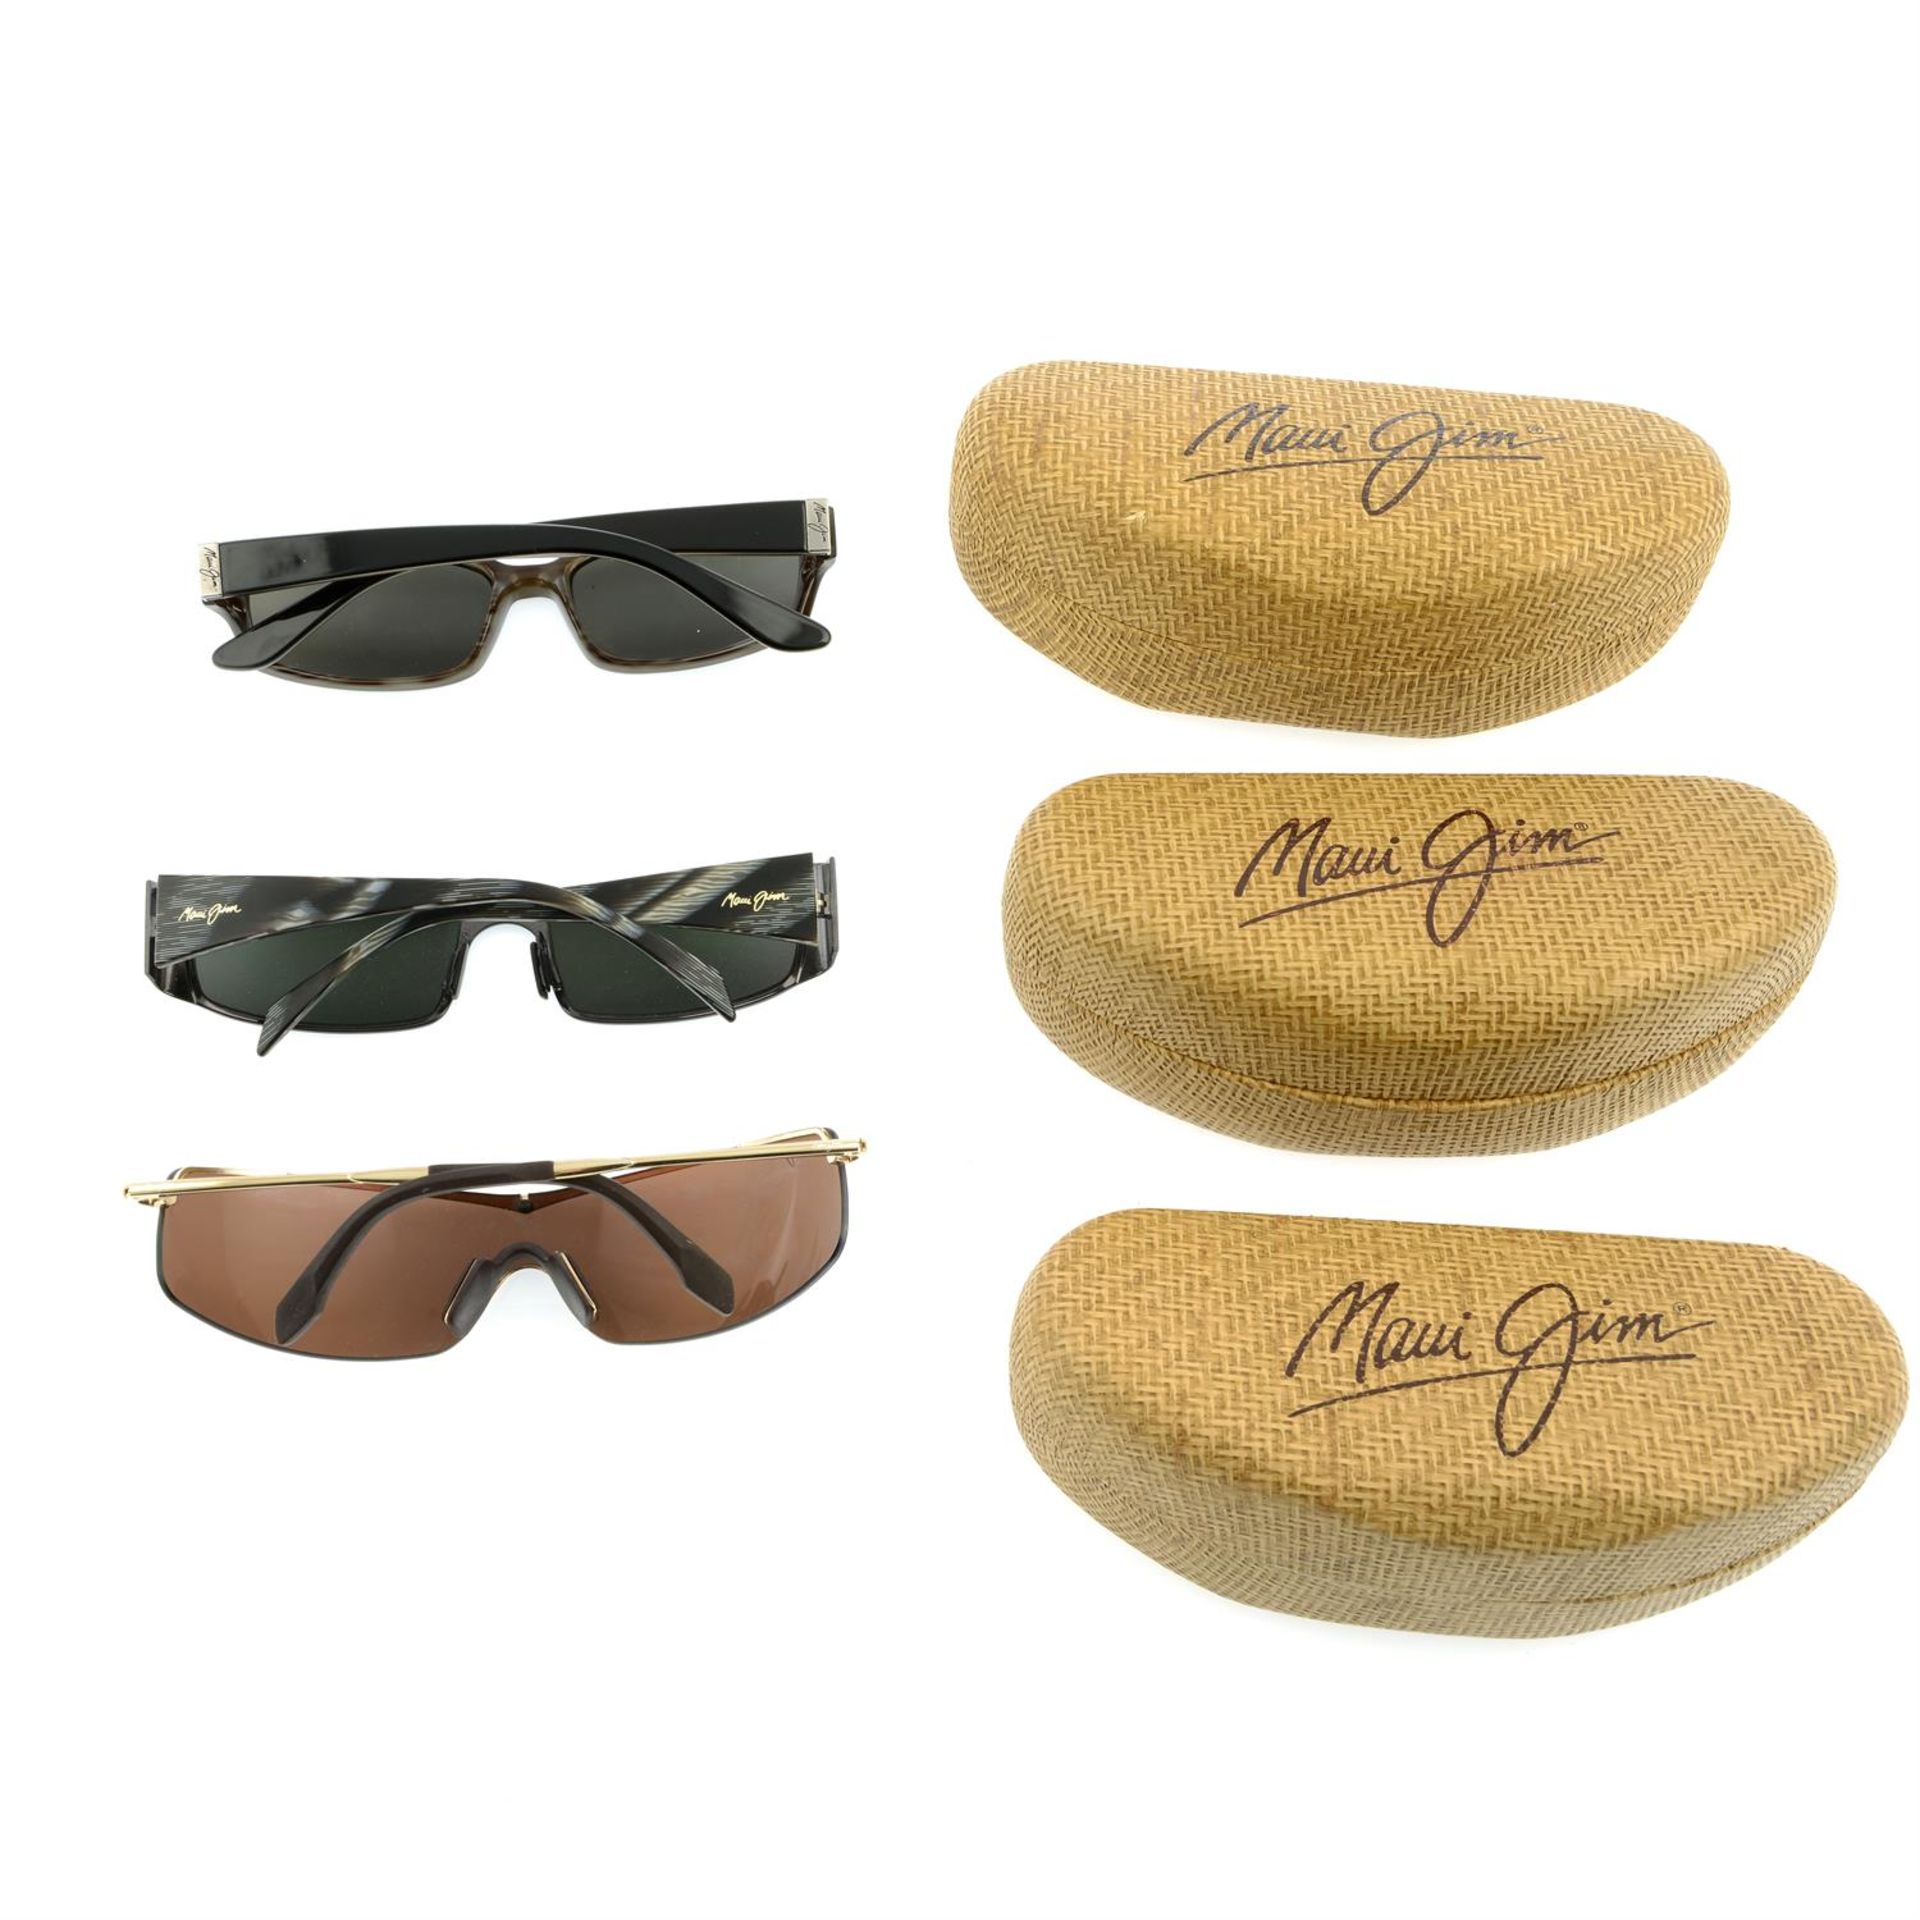 MAUI JIM - three pairs of sunglasses. - Image 2 of 2